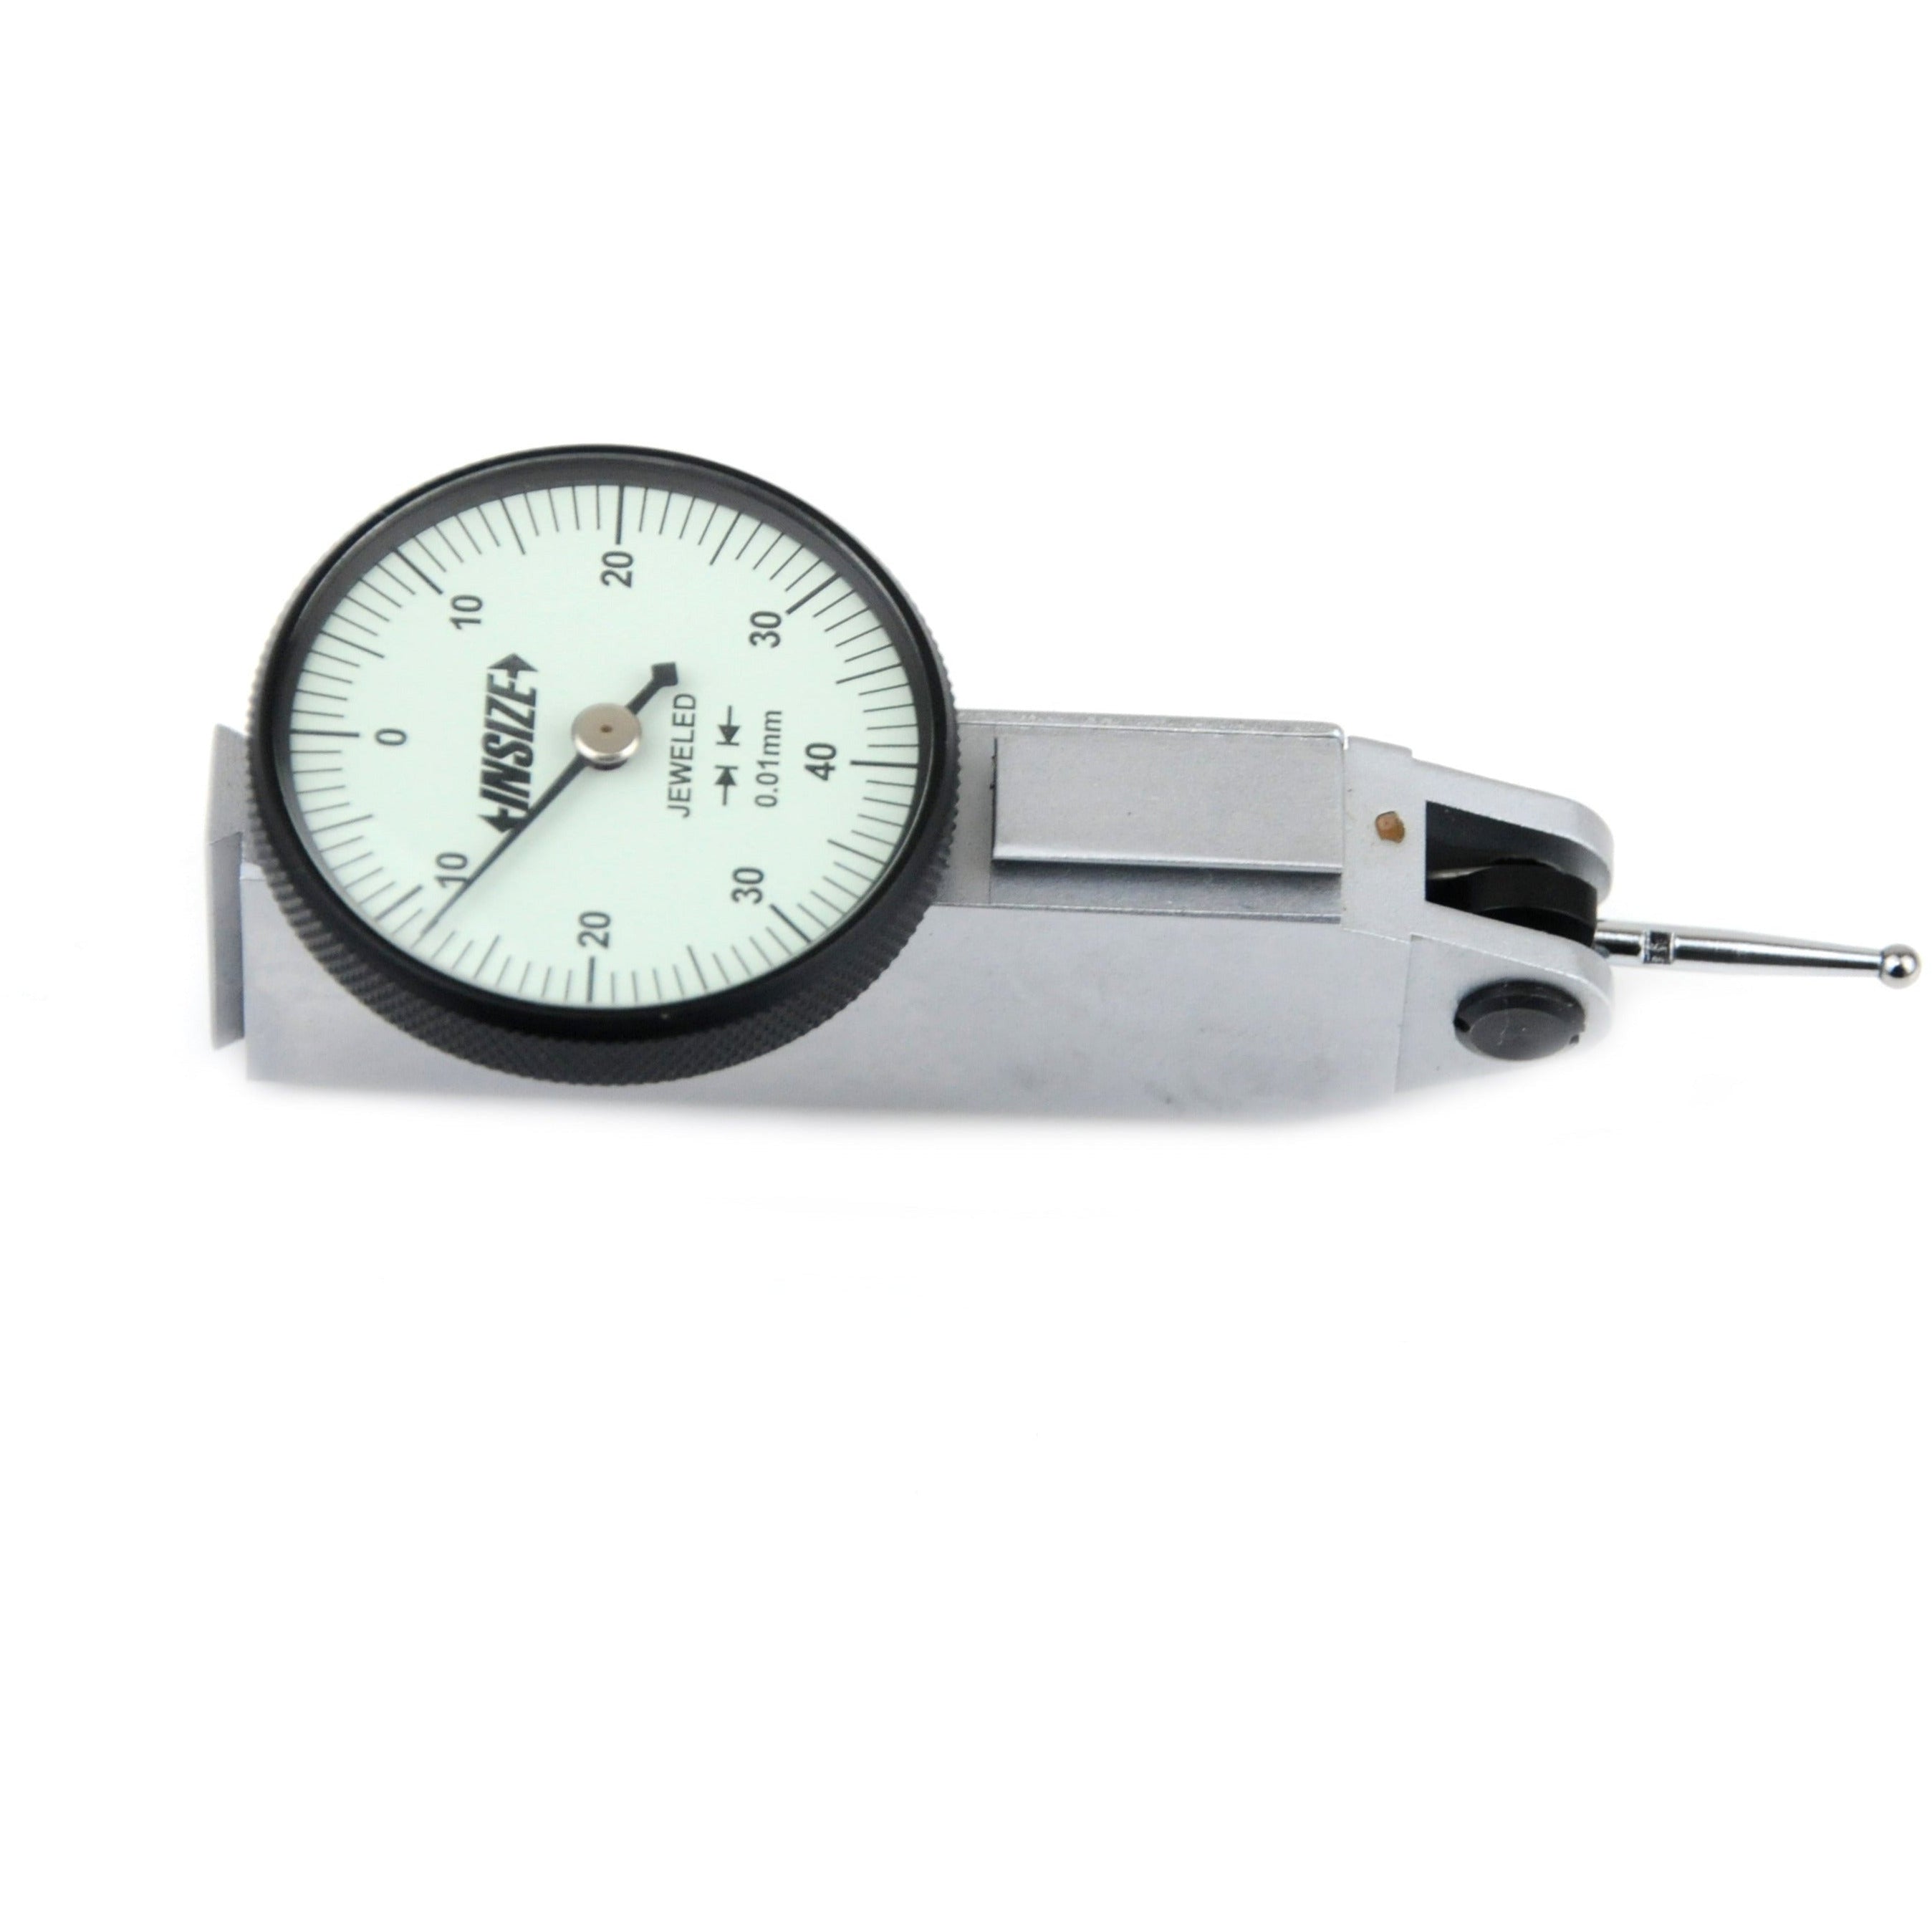 Insize Metric Dial Indicator 0.8 mm Range Series 2380-08